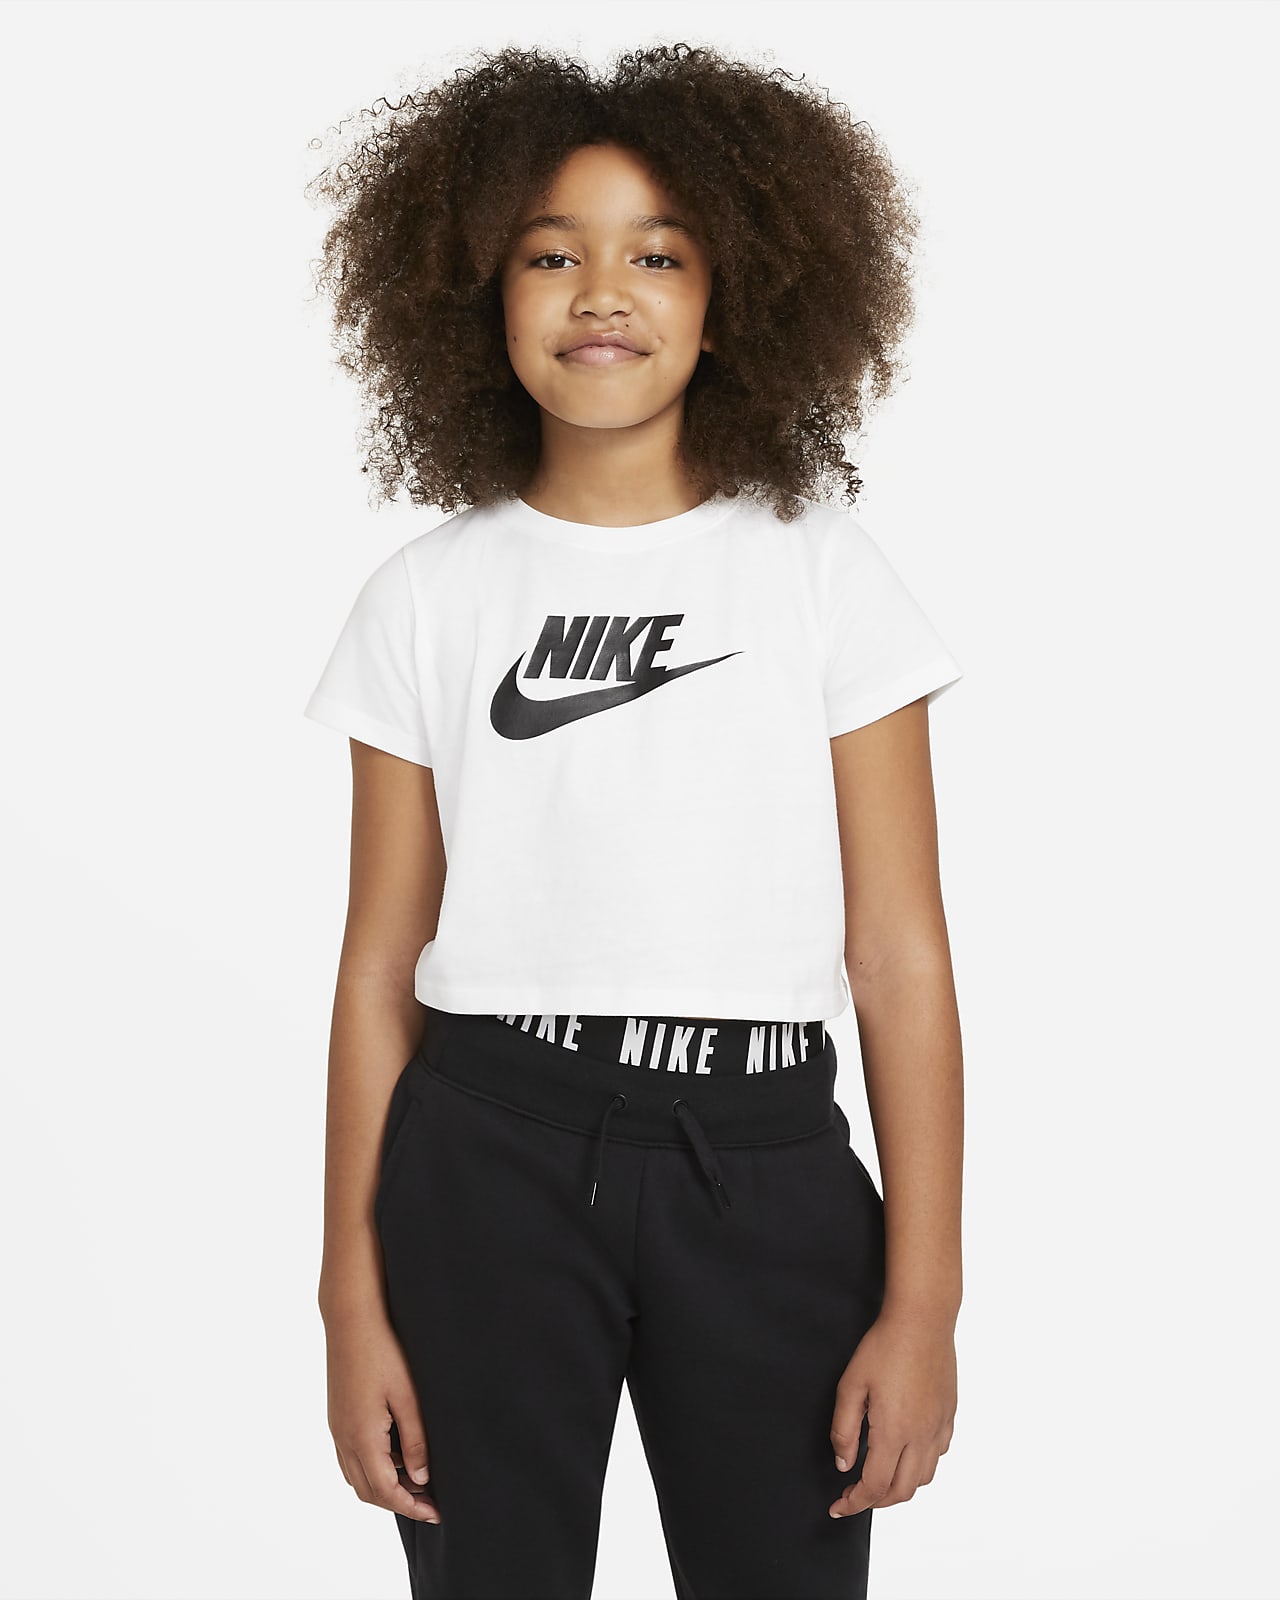 Nike Sportswear Samarreta retallada - Nena